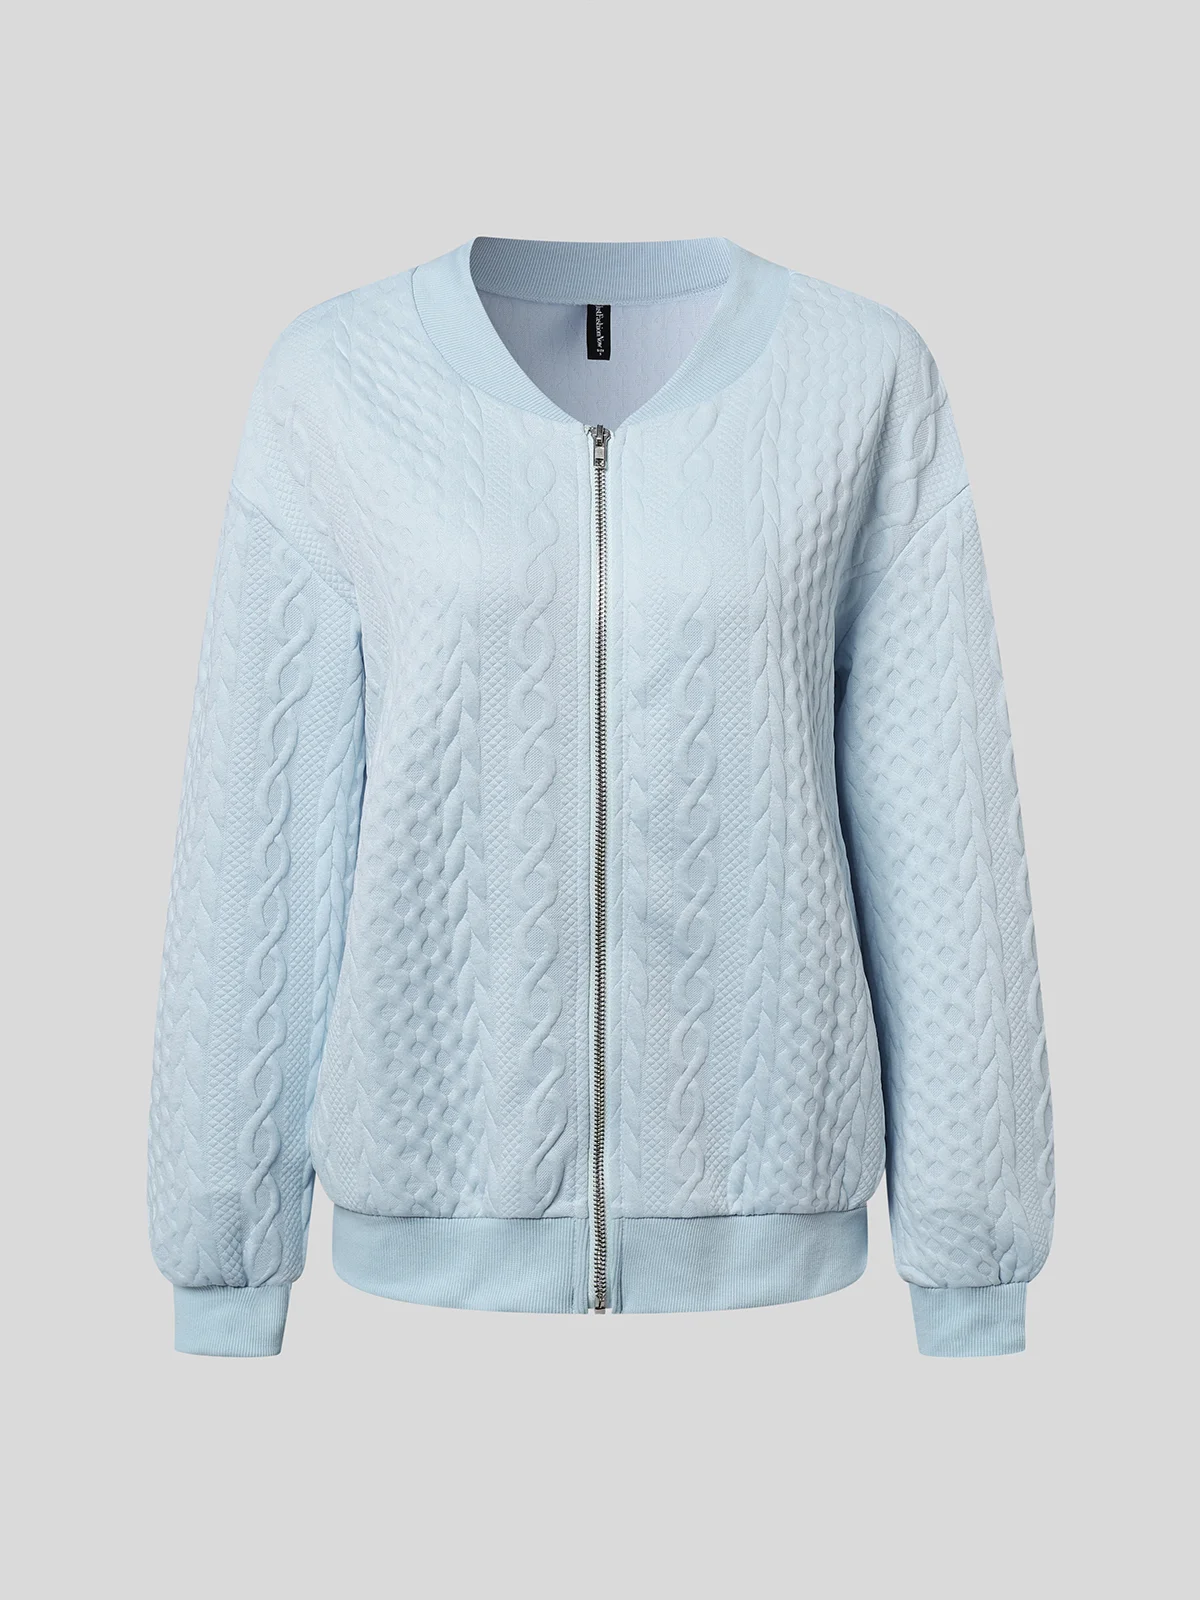 Women's Casual Zipper Plain Loose Texture Bomber Jacket Fall/Winter White Gray Black Pink Blue Green Light Blue